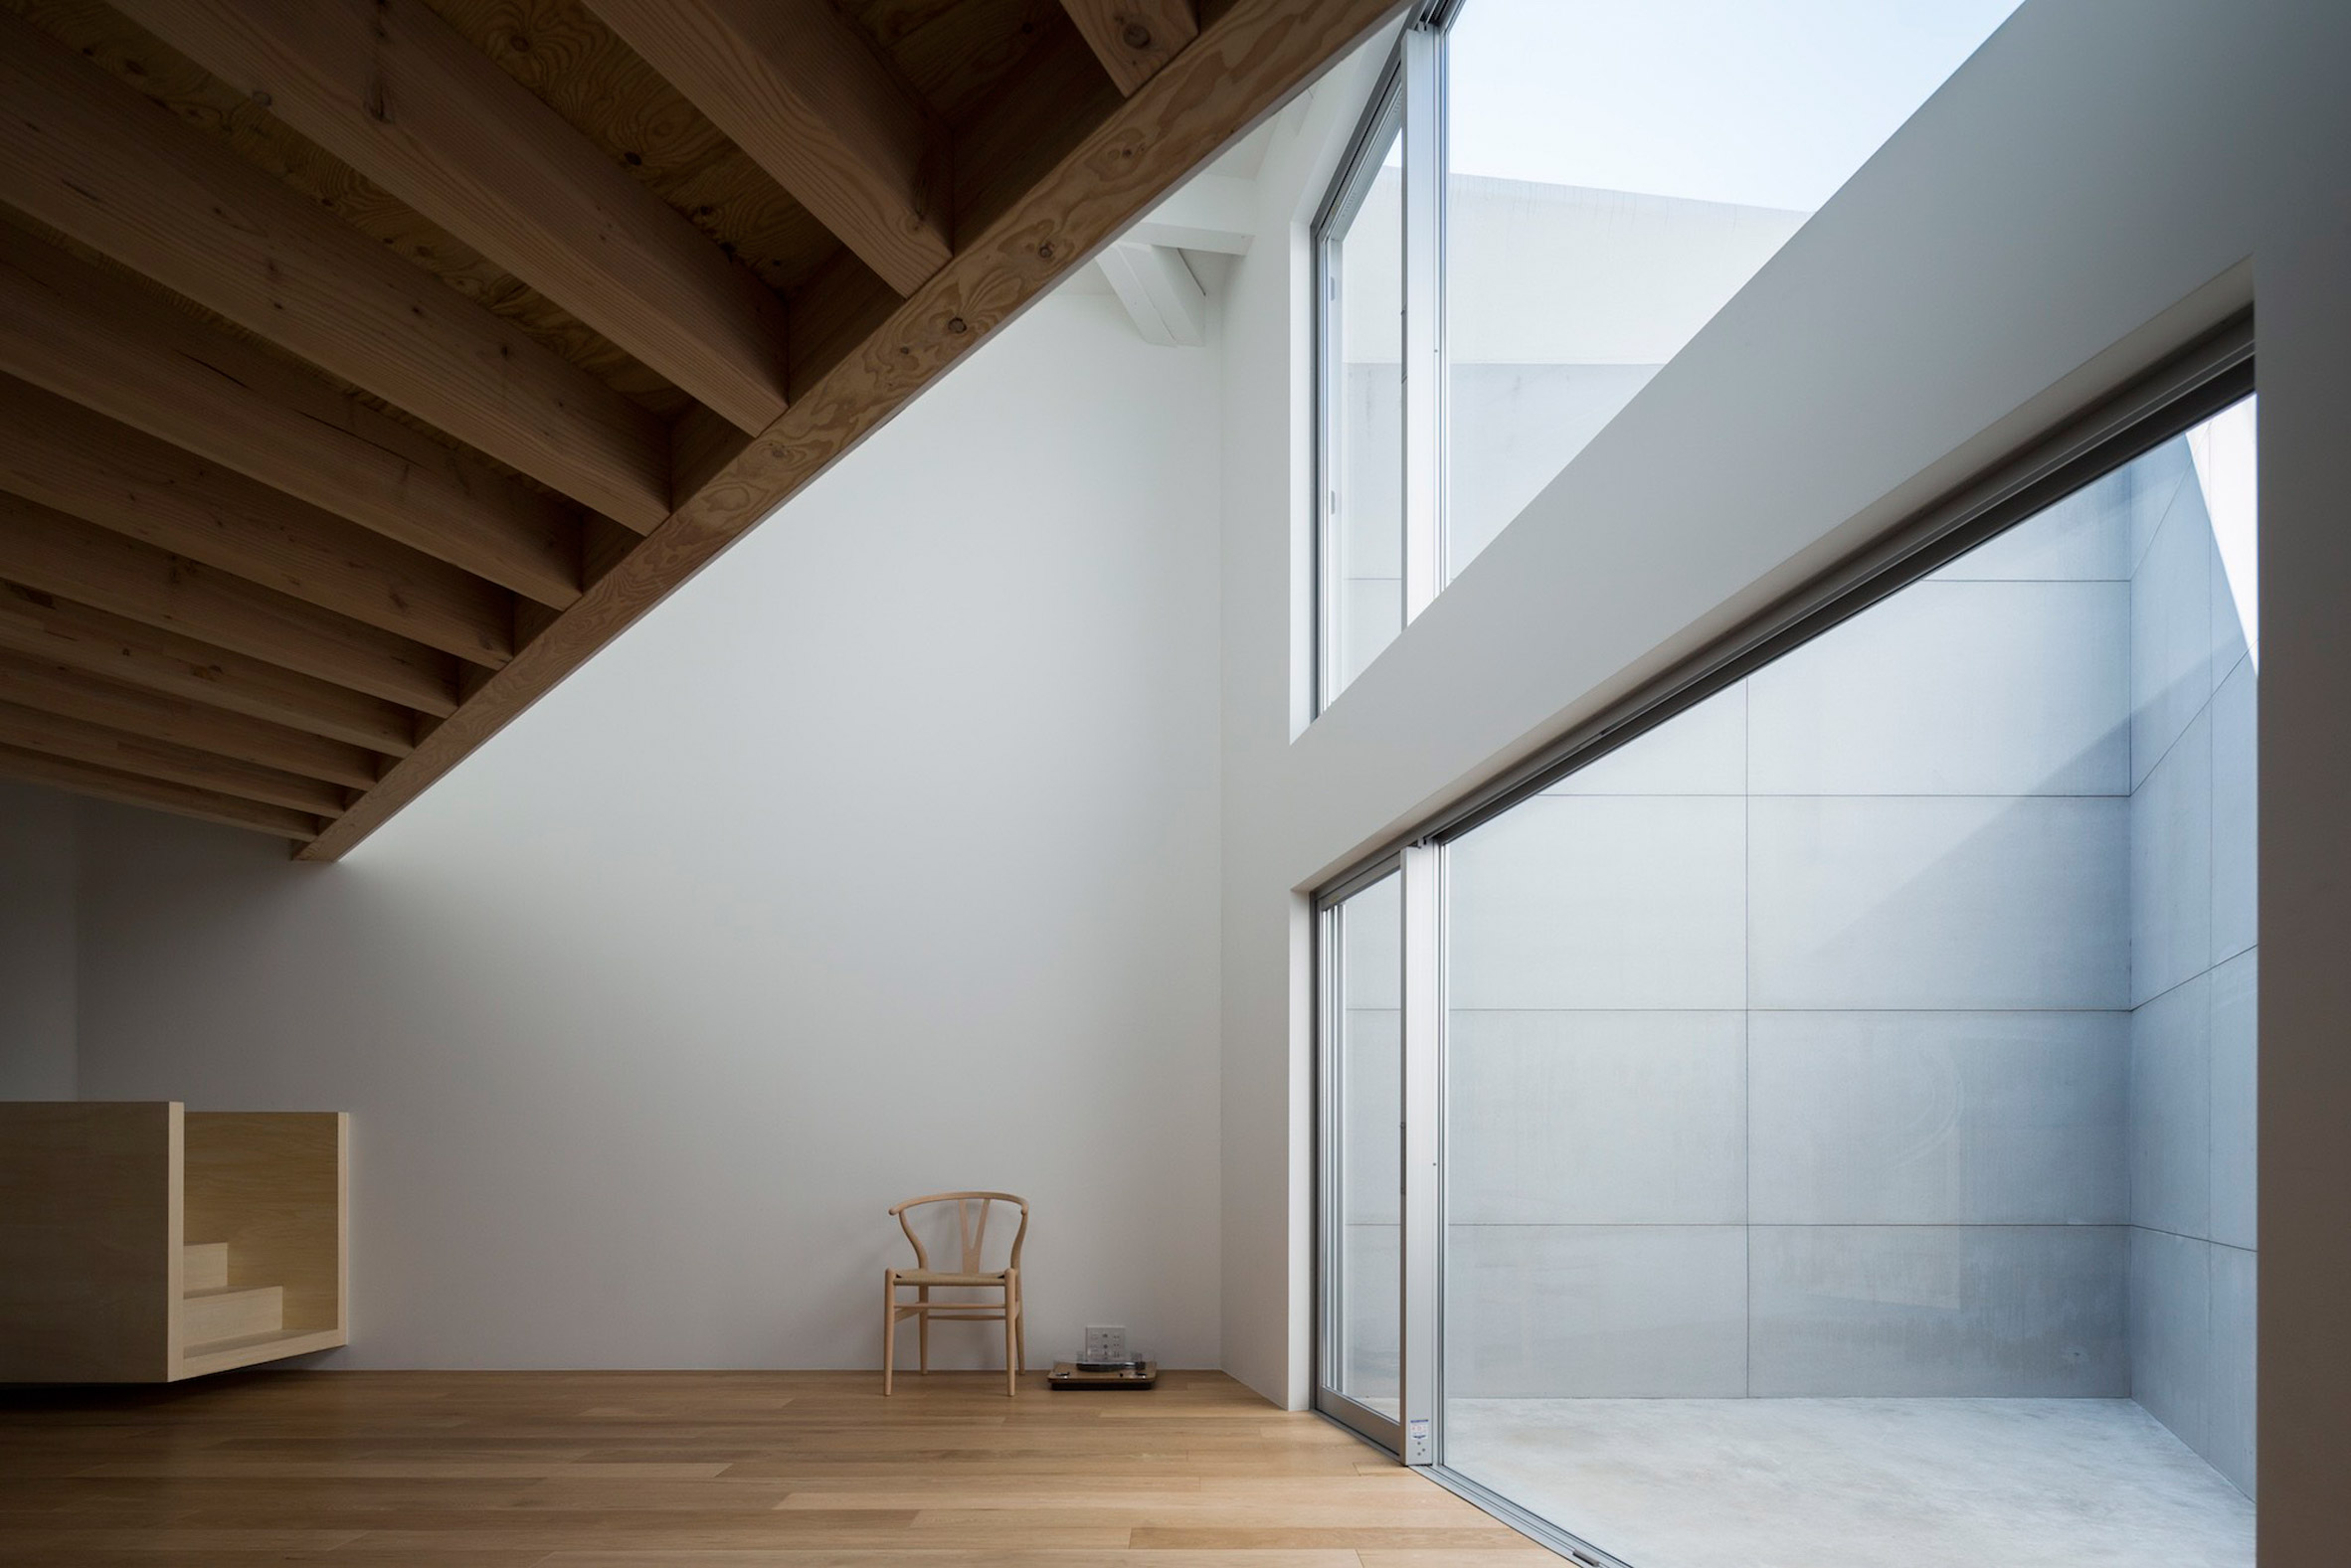 Kamiuma House by Hiroo Okubo and CHOP+ARCHI